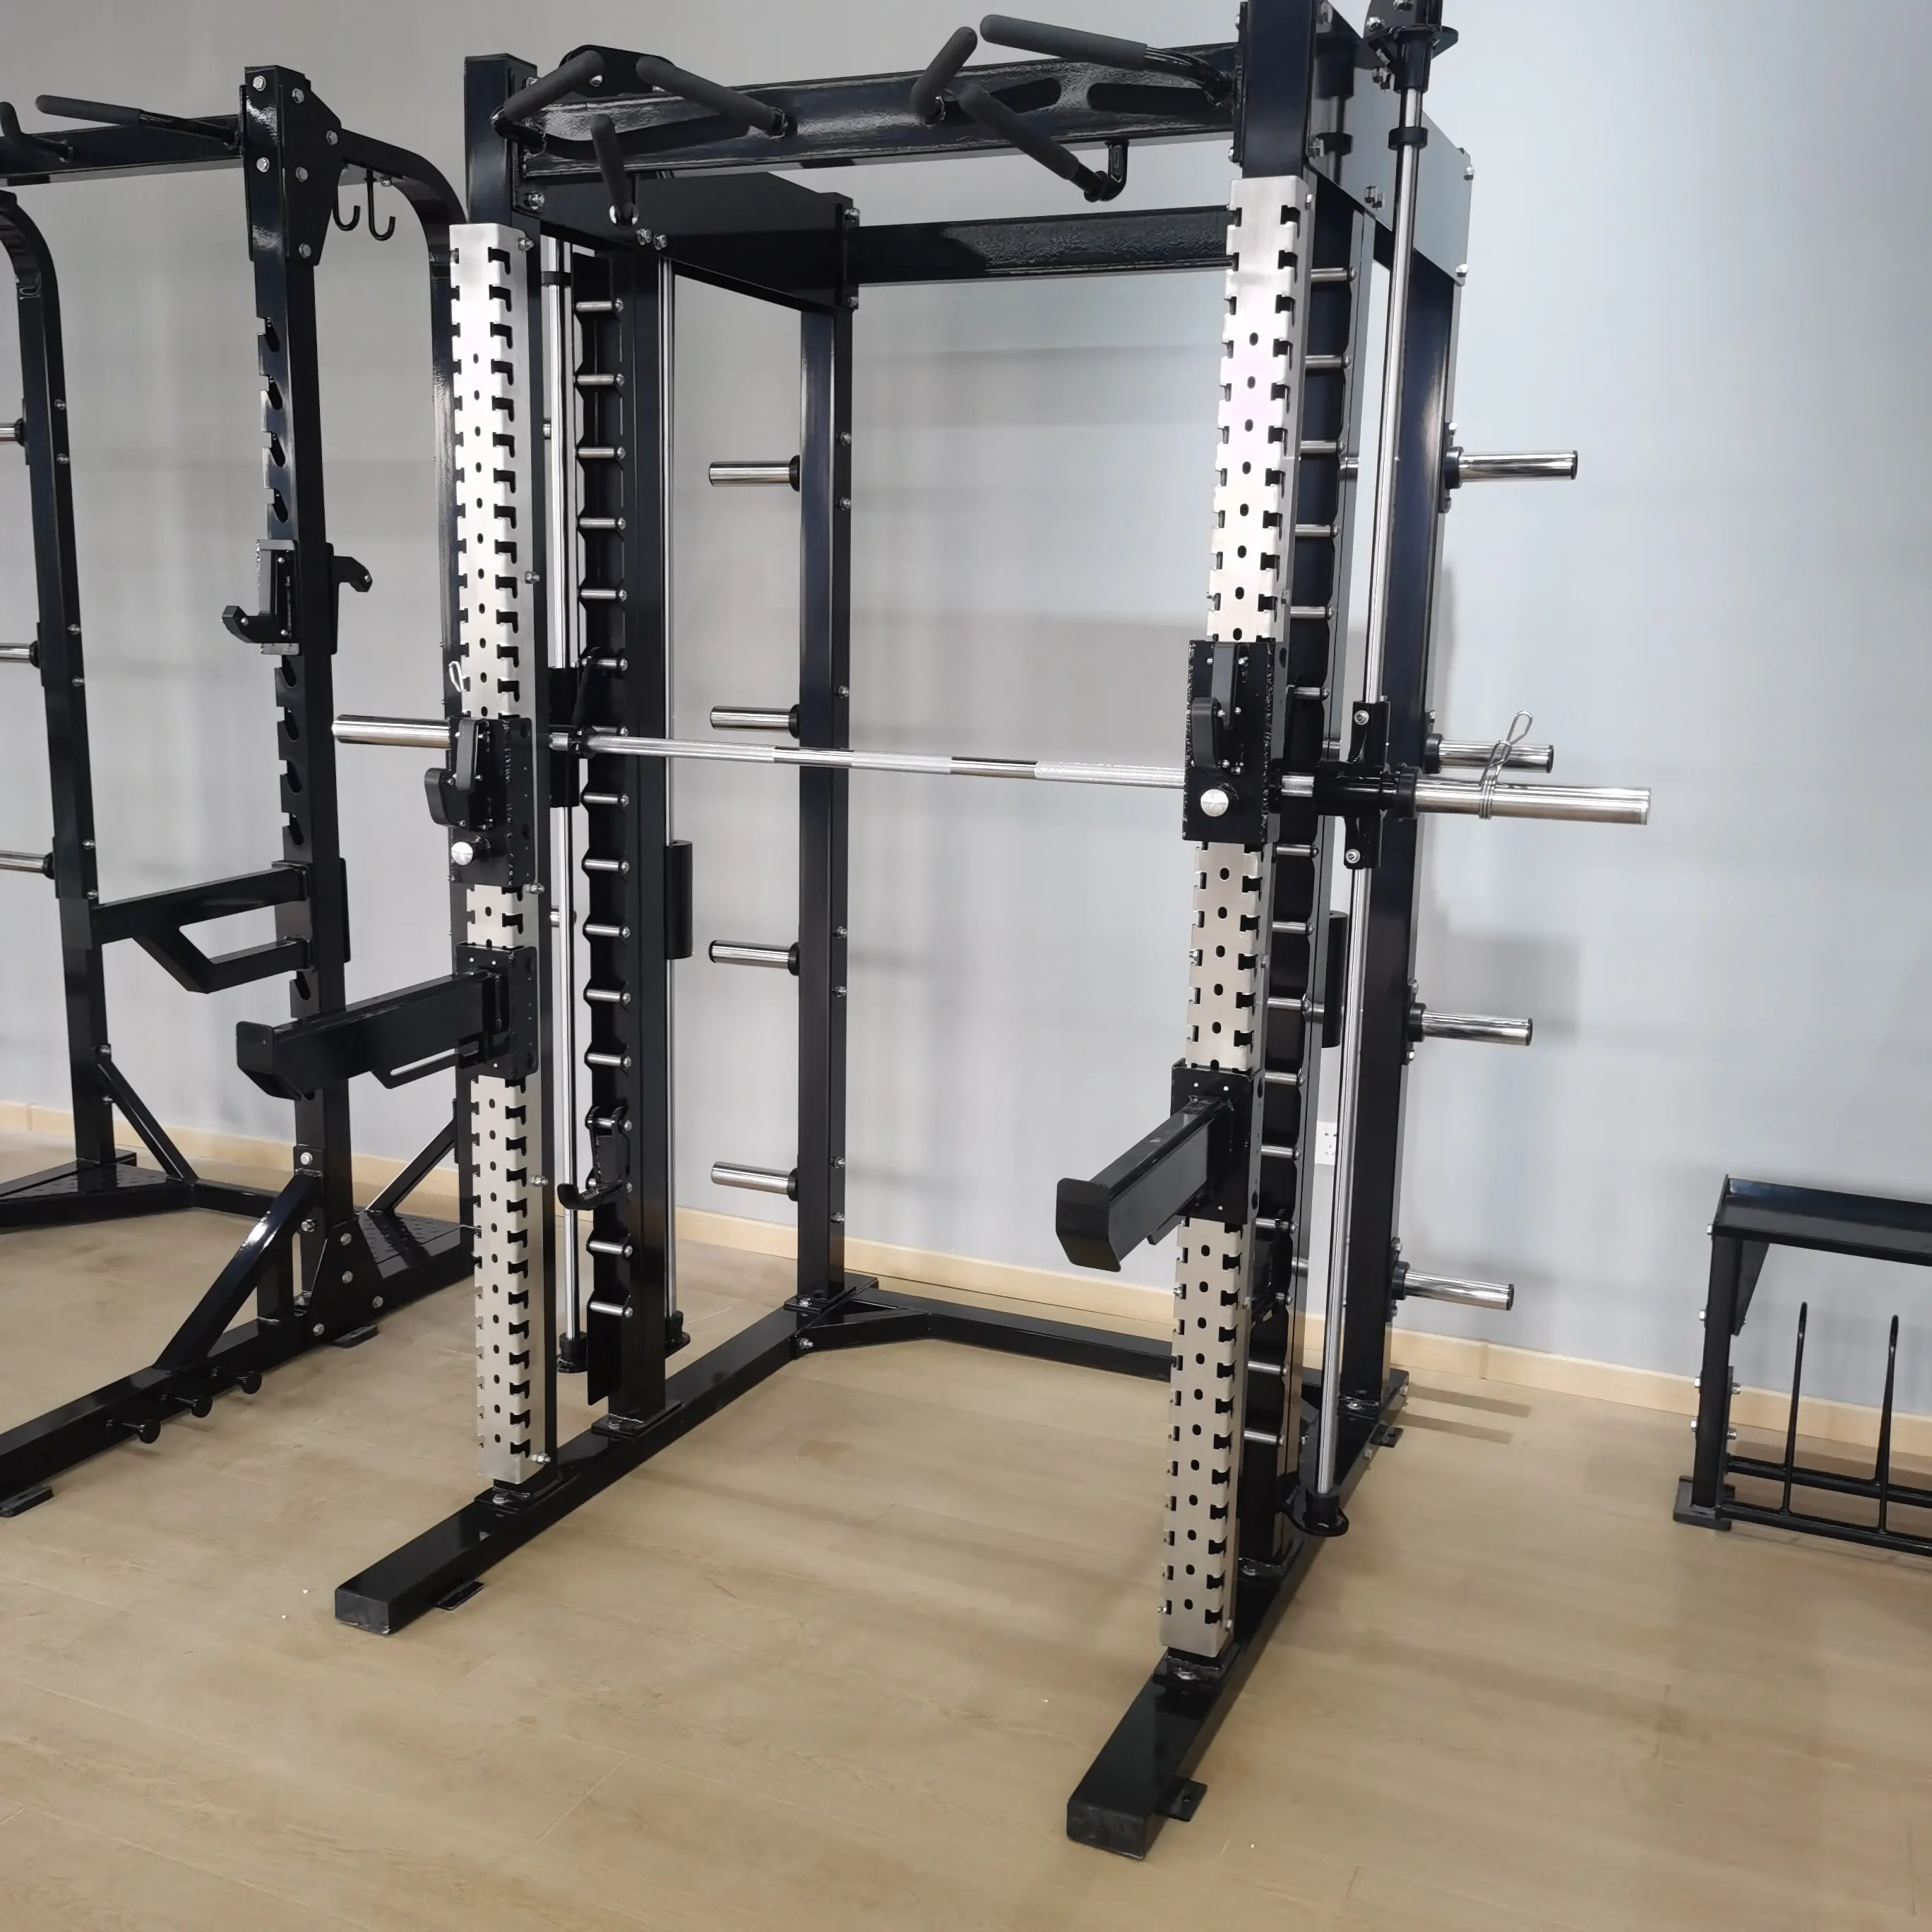 COMMERCIAL Gym equipment gym fitness equipment Body building power rack